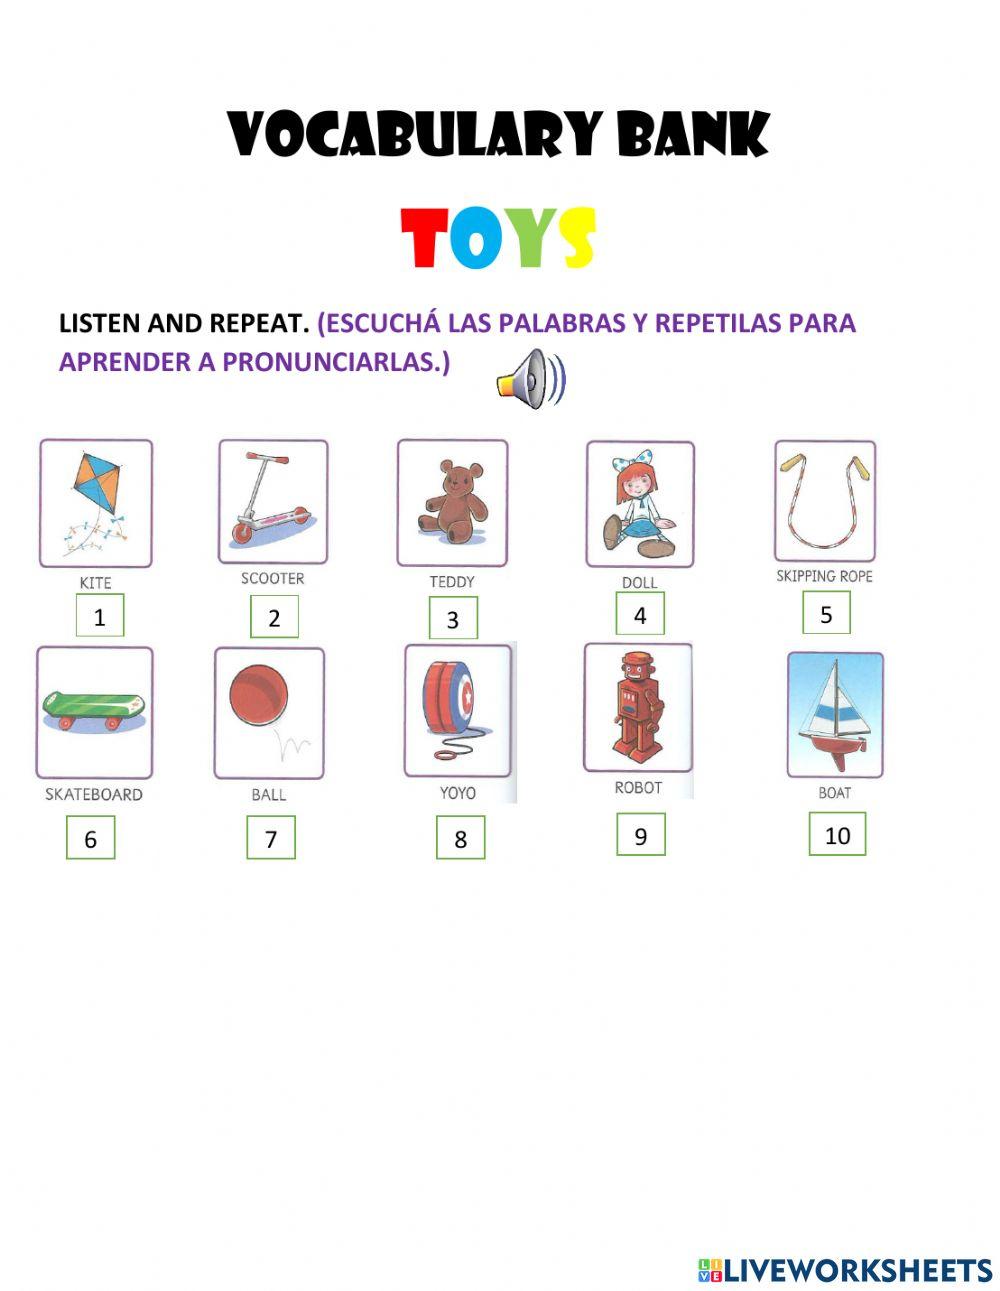 Vocabulary bank - toys